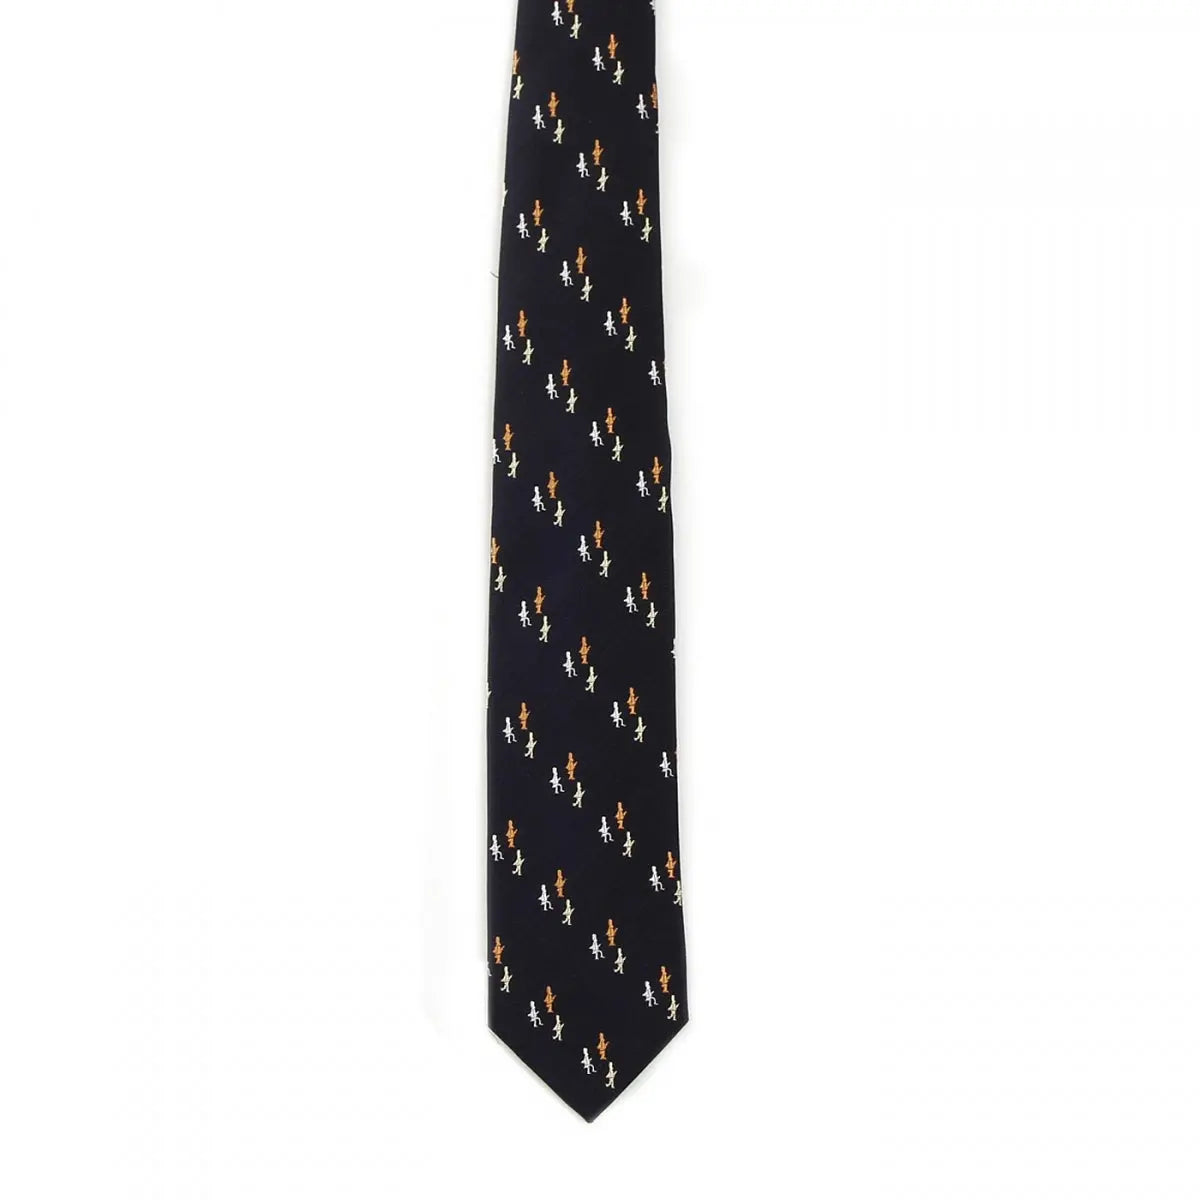 Men’s Jacquard Woven 100% Kyoto Silk Tie -03. Friendship Queen’s Guards Stripe Pattern Made in Japan FORTUNA Tokyo